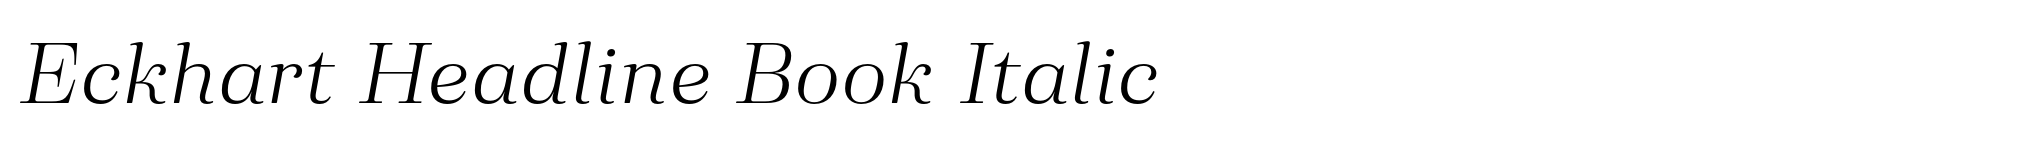 Eckhart Headline Book Italic image